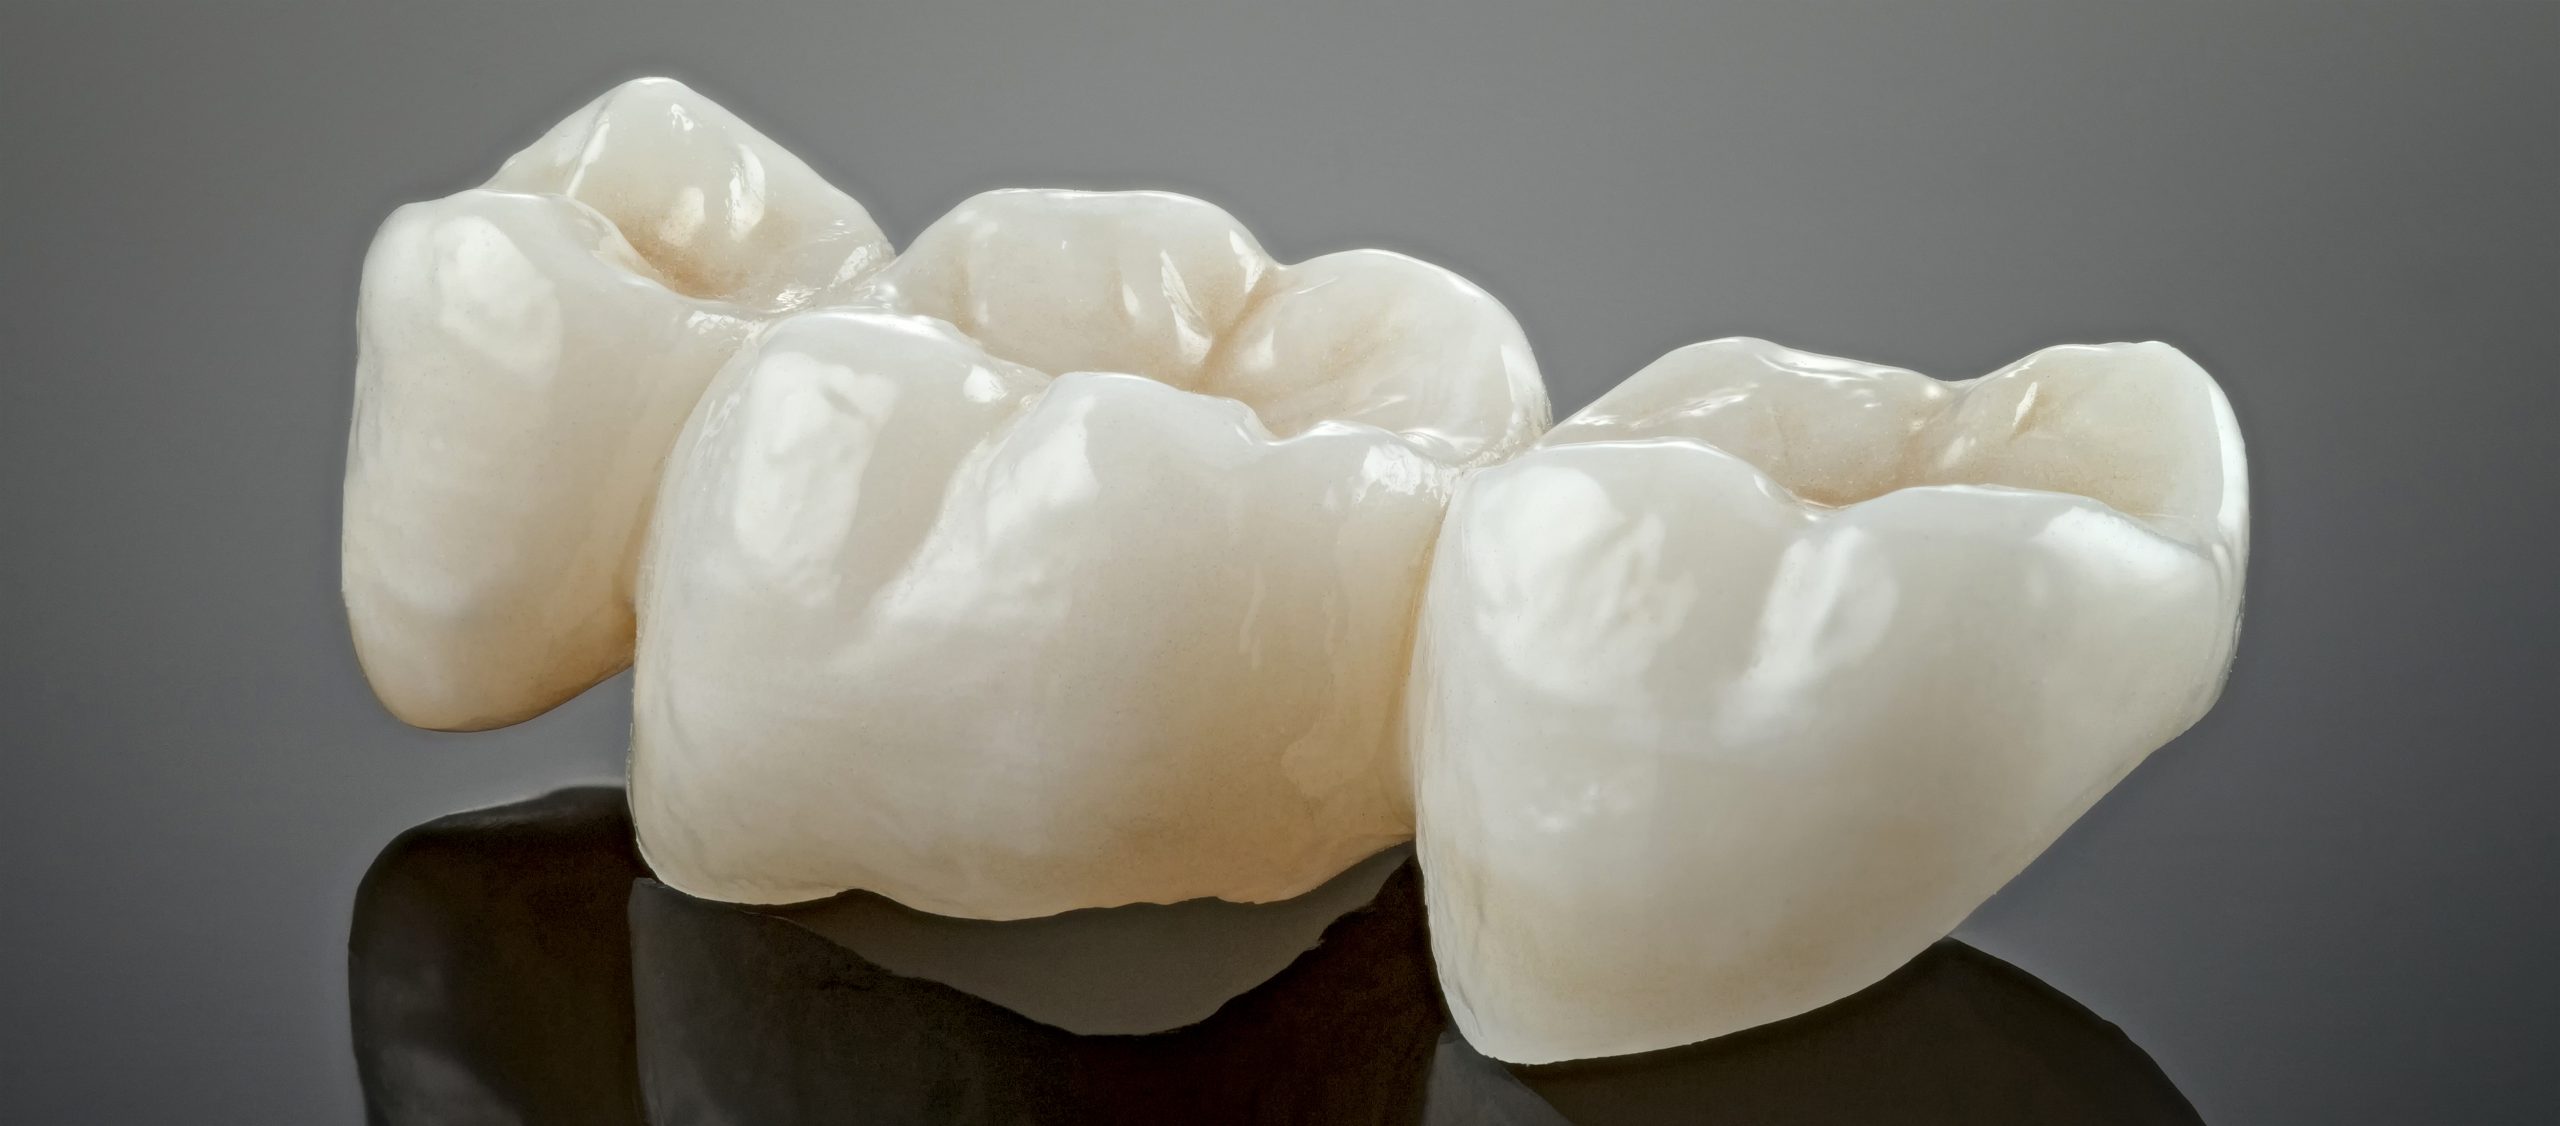 Metal Free Ceramic Dental Crowns